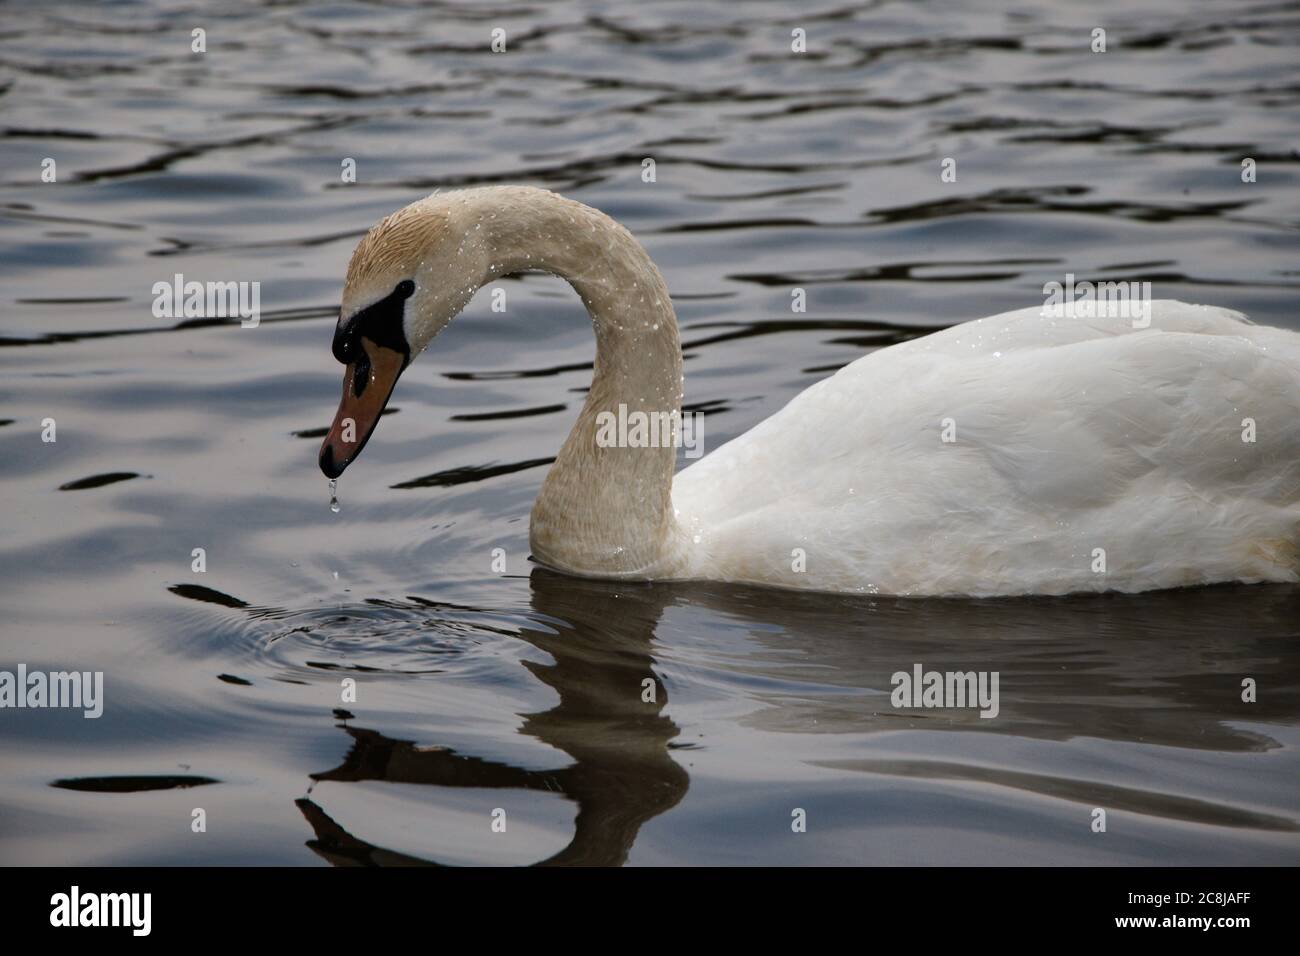 Majestic white swan swimming in a lake Stock Photo